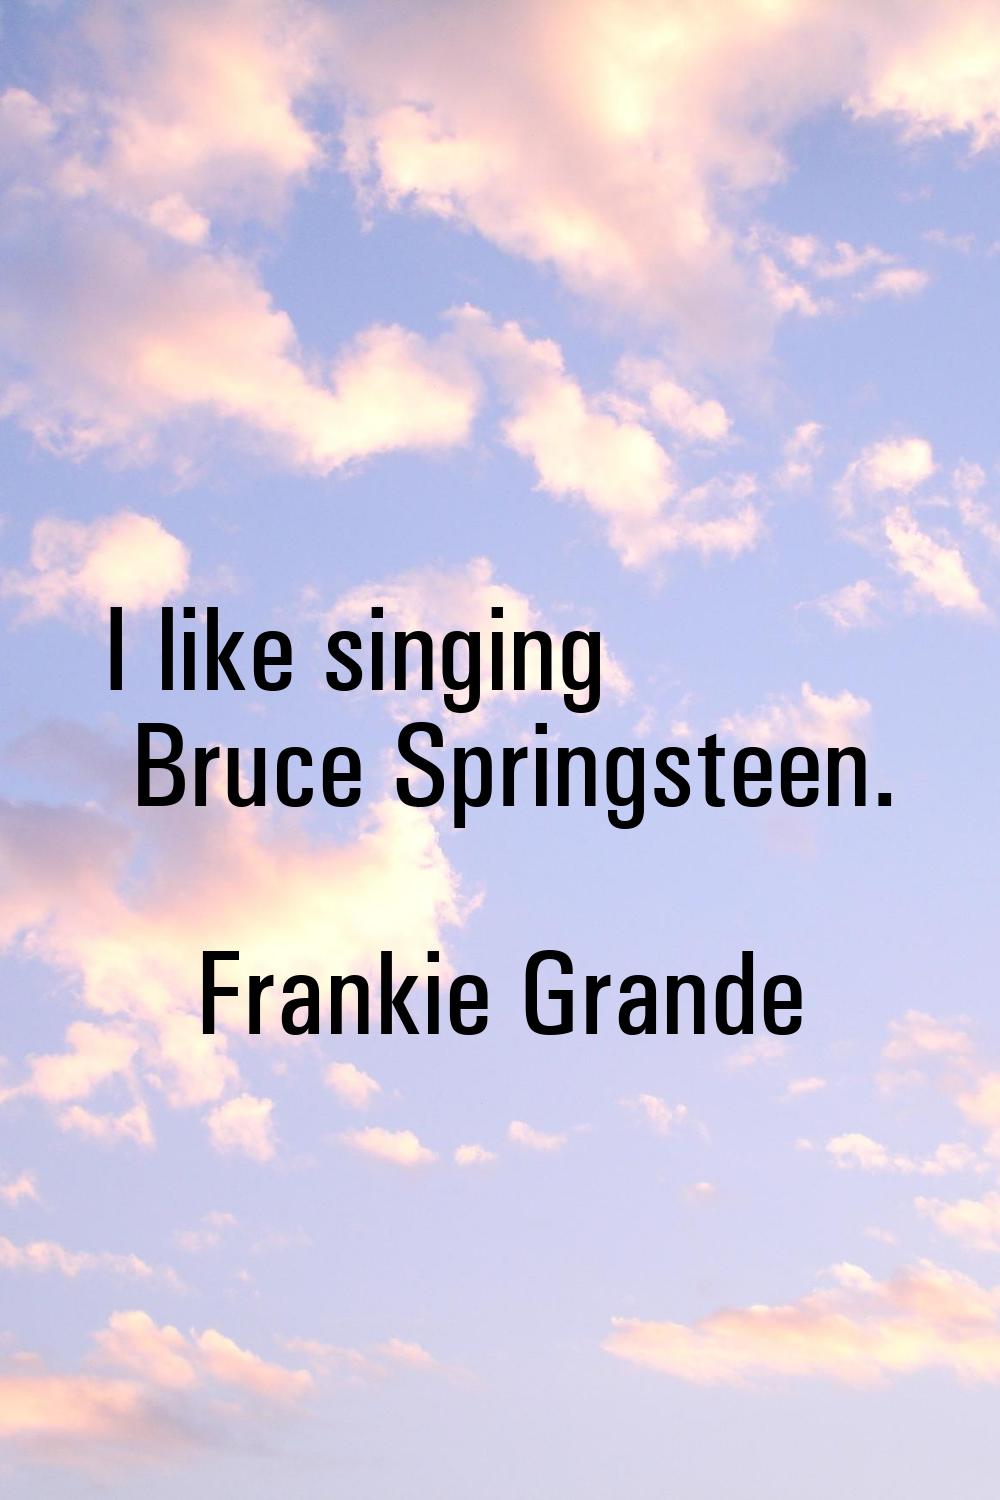 I like singing Bruce Springsteen.